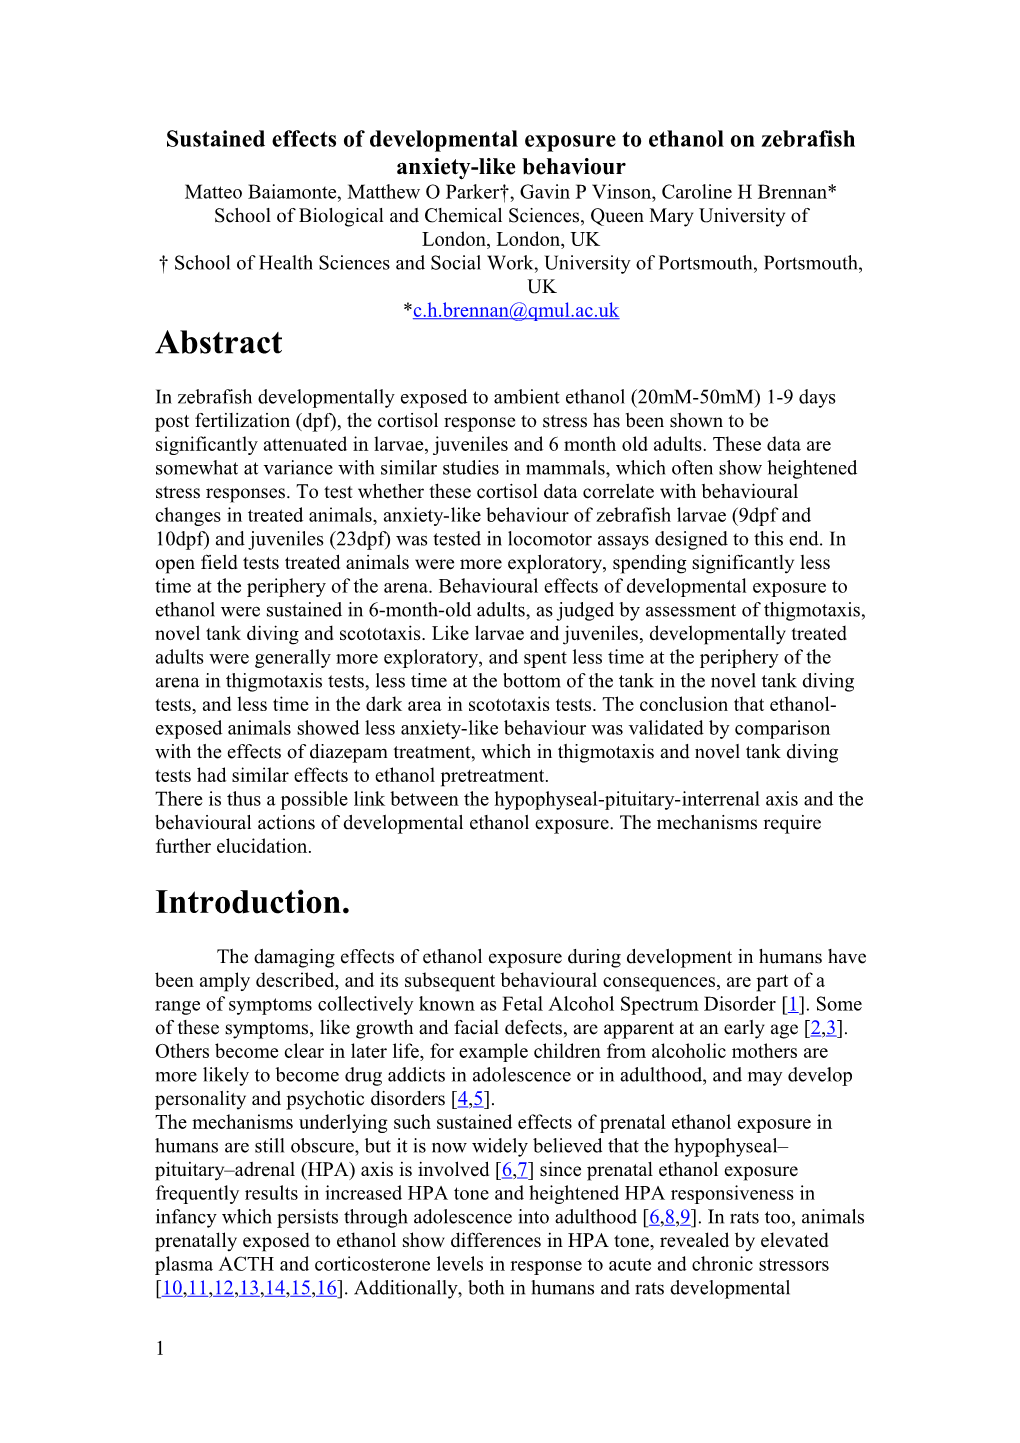 Sustained Effects of Developmental Exposure to Ethanol on Zebrafish Anxiety-Like Behaviour